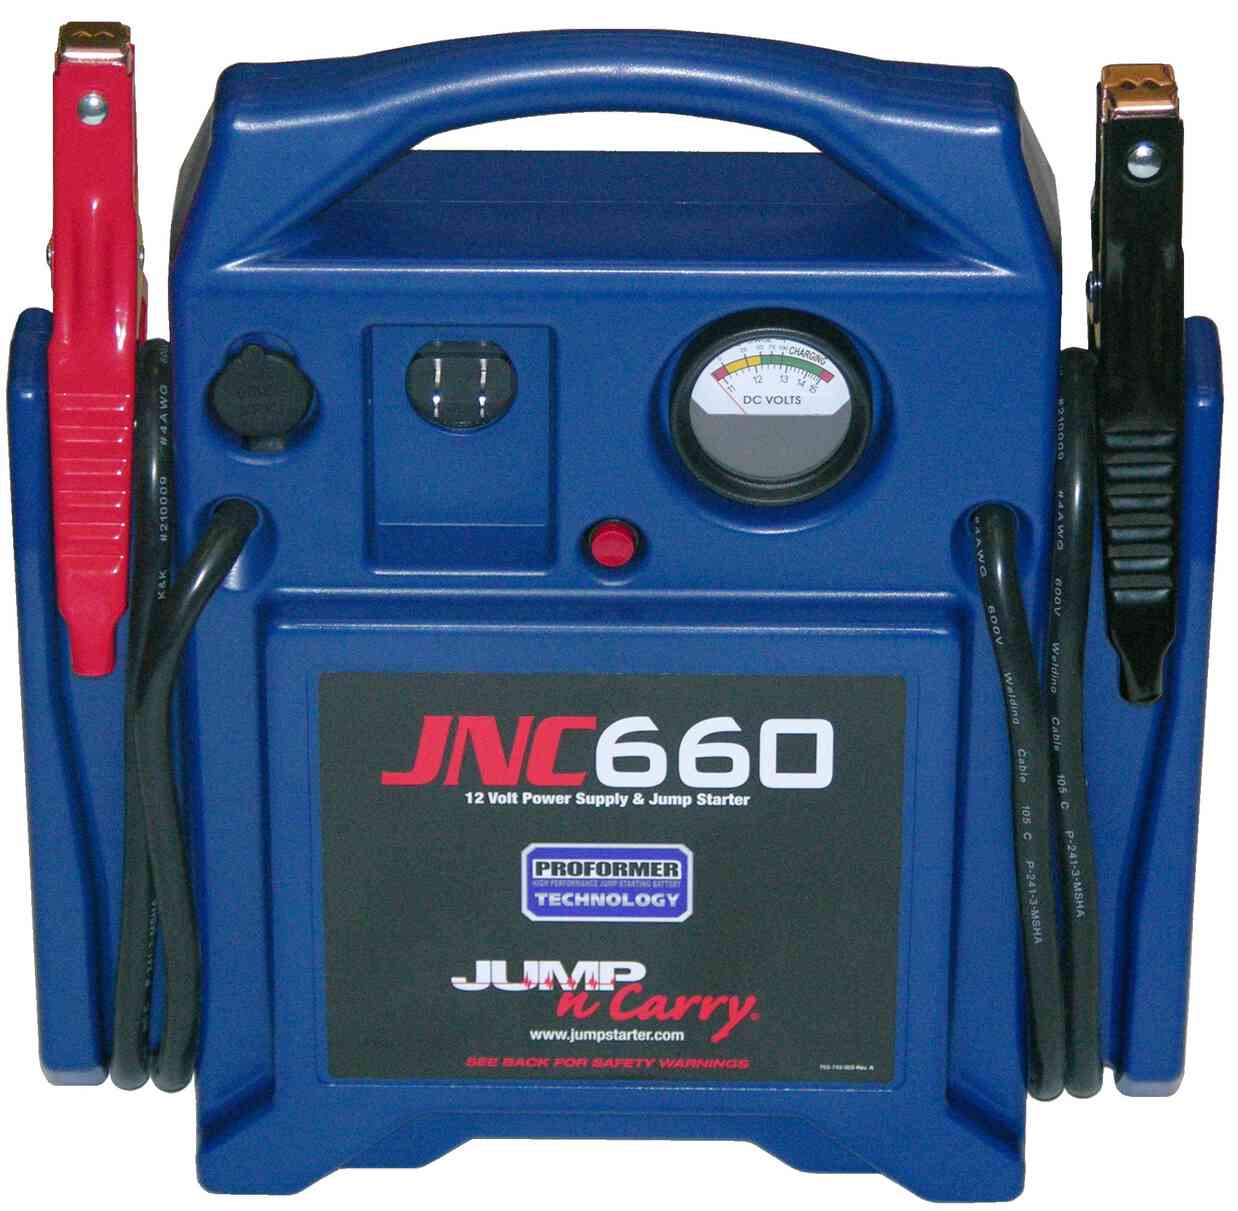 
                                        Portable Jump Start Pack 41-JNC660                  